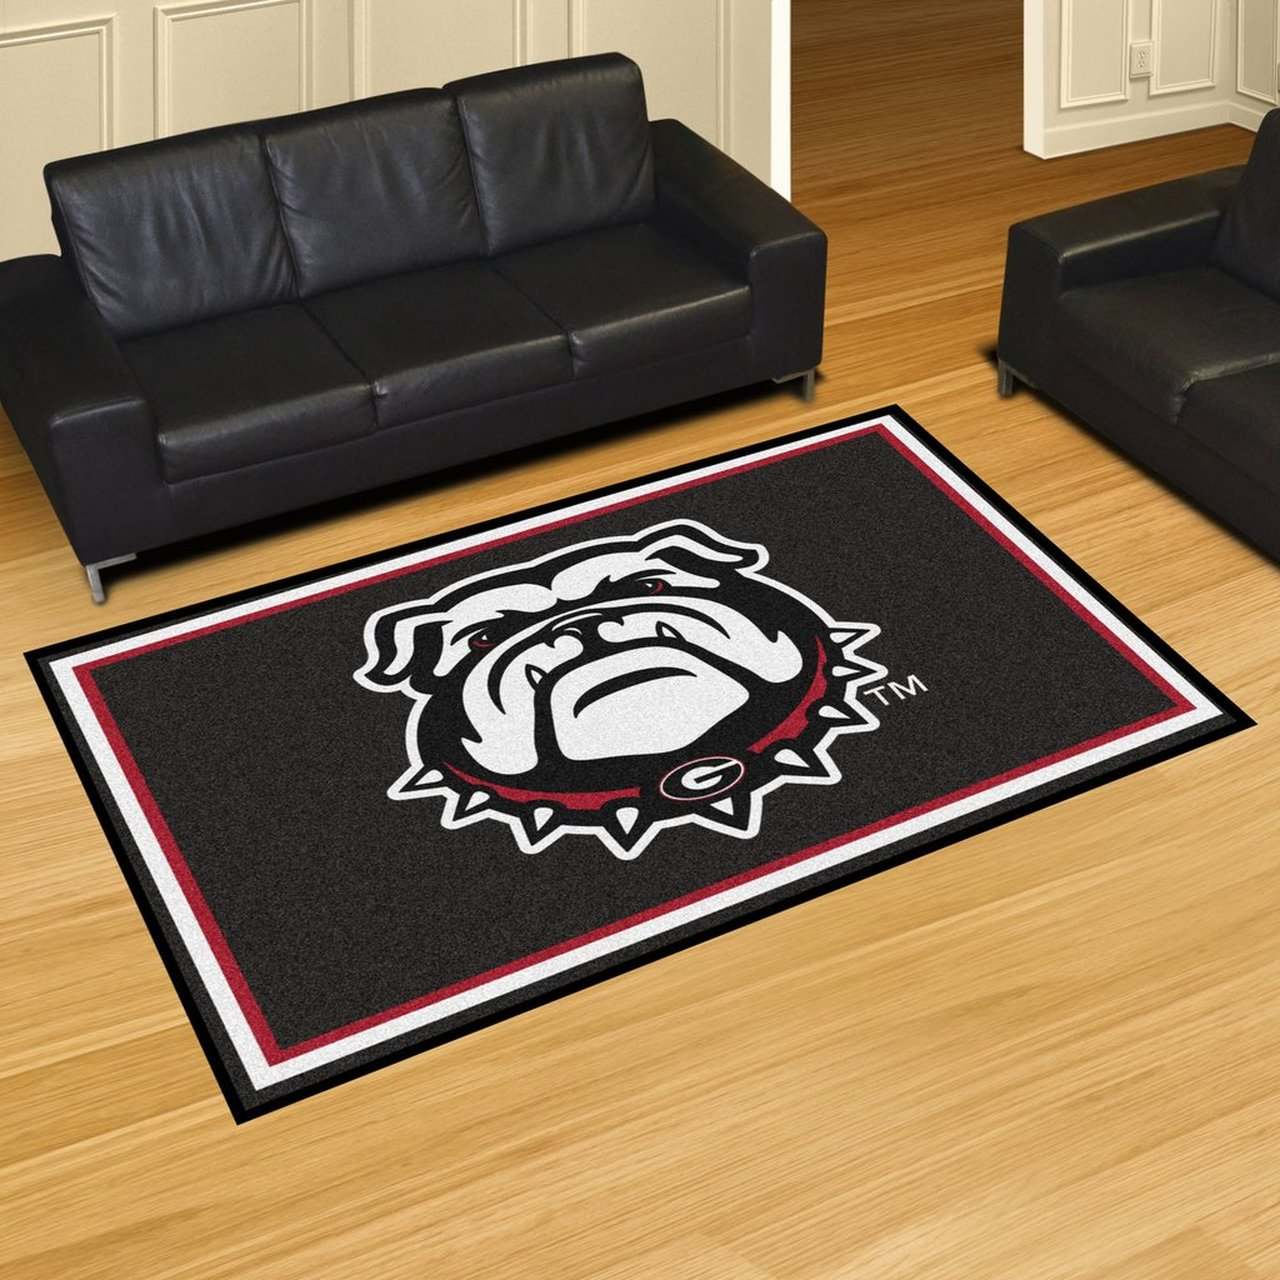 Georgia Black New Bulldog Area Rugs Living Room Carpet FN261203 Local Brands Floor Decor